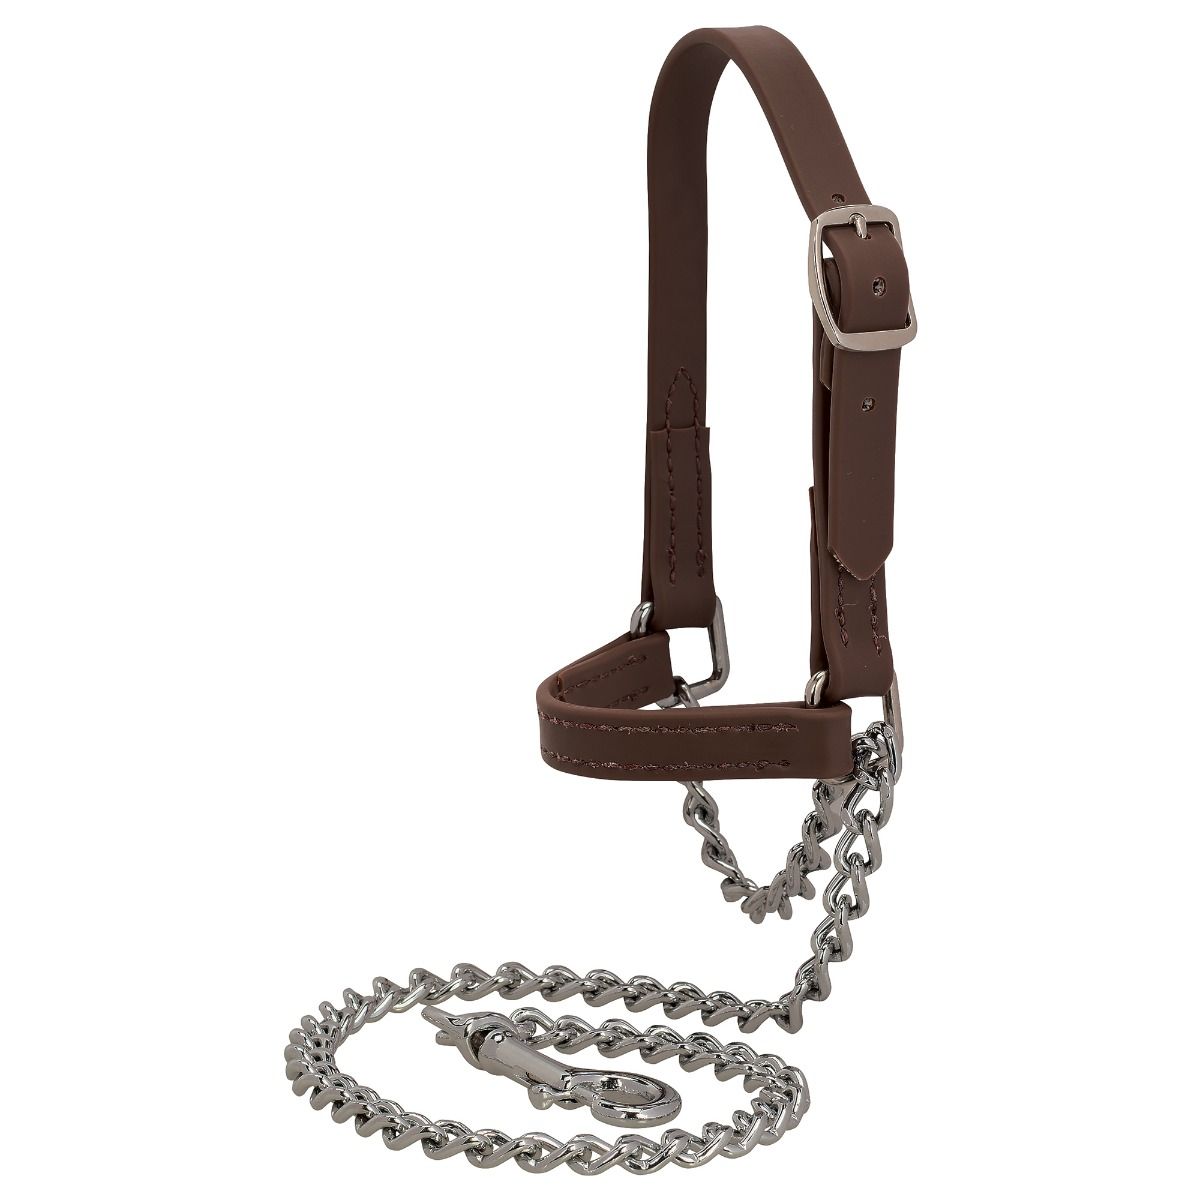 Nickel Plated Chain Weaver Leather Brahma Webb Goat Collar 